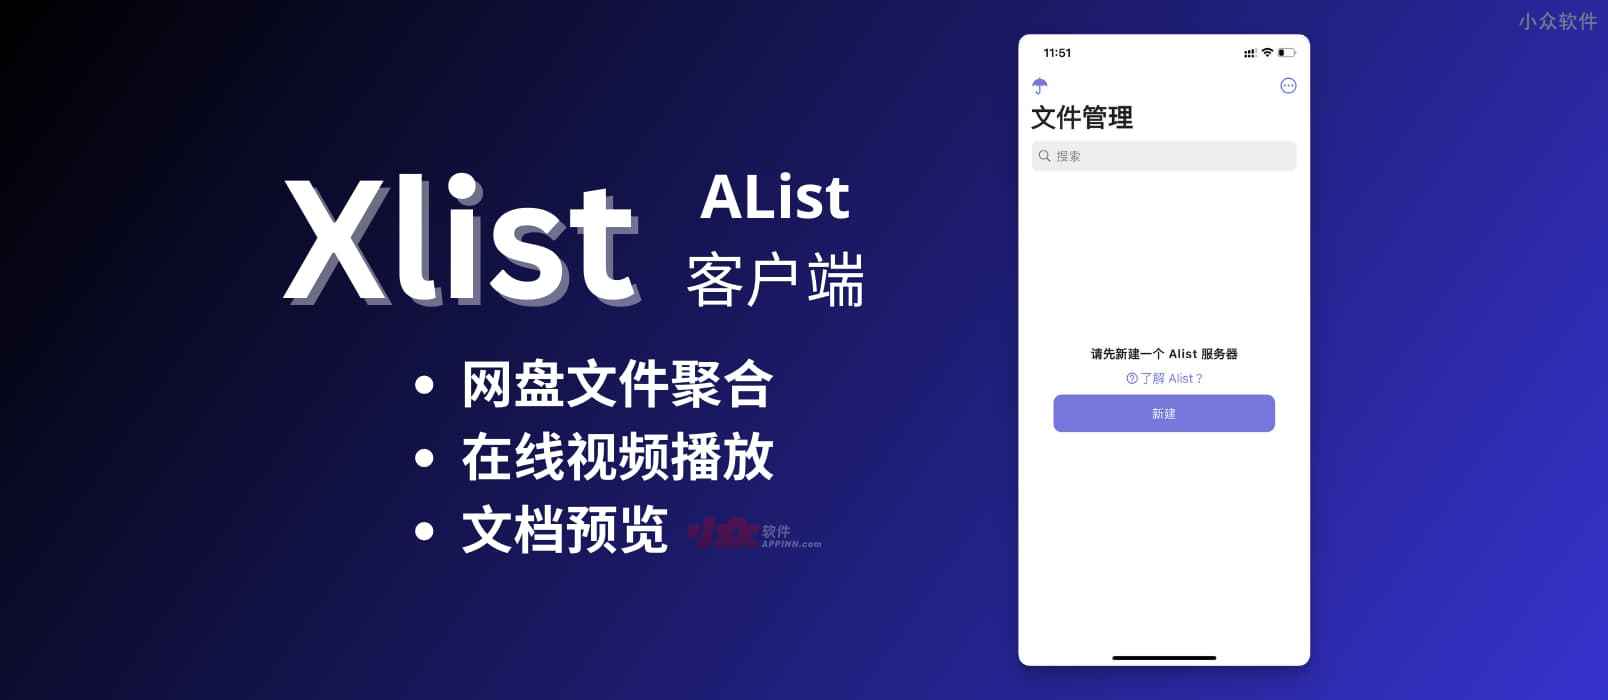 Xlist – AList 手机客户端，网盘文件聚合，支持在线视频播放和文档预览[iPhone]